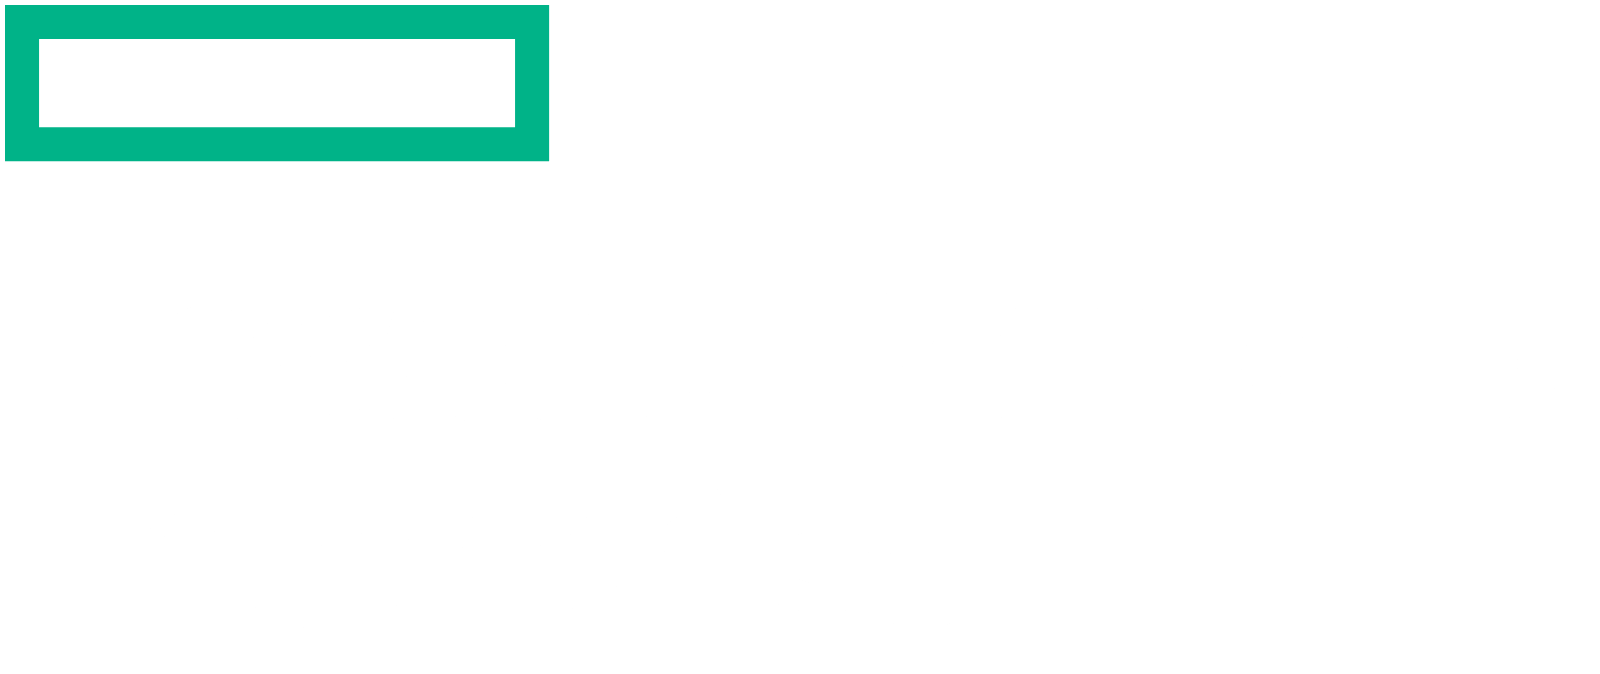 Hewlett-Packard Enterprise Logo - Hewlett Packard Enterprise • Digital Media Press Kit